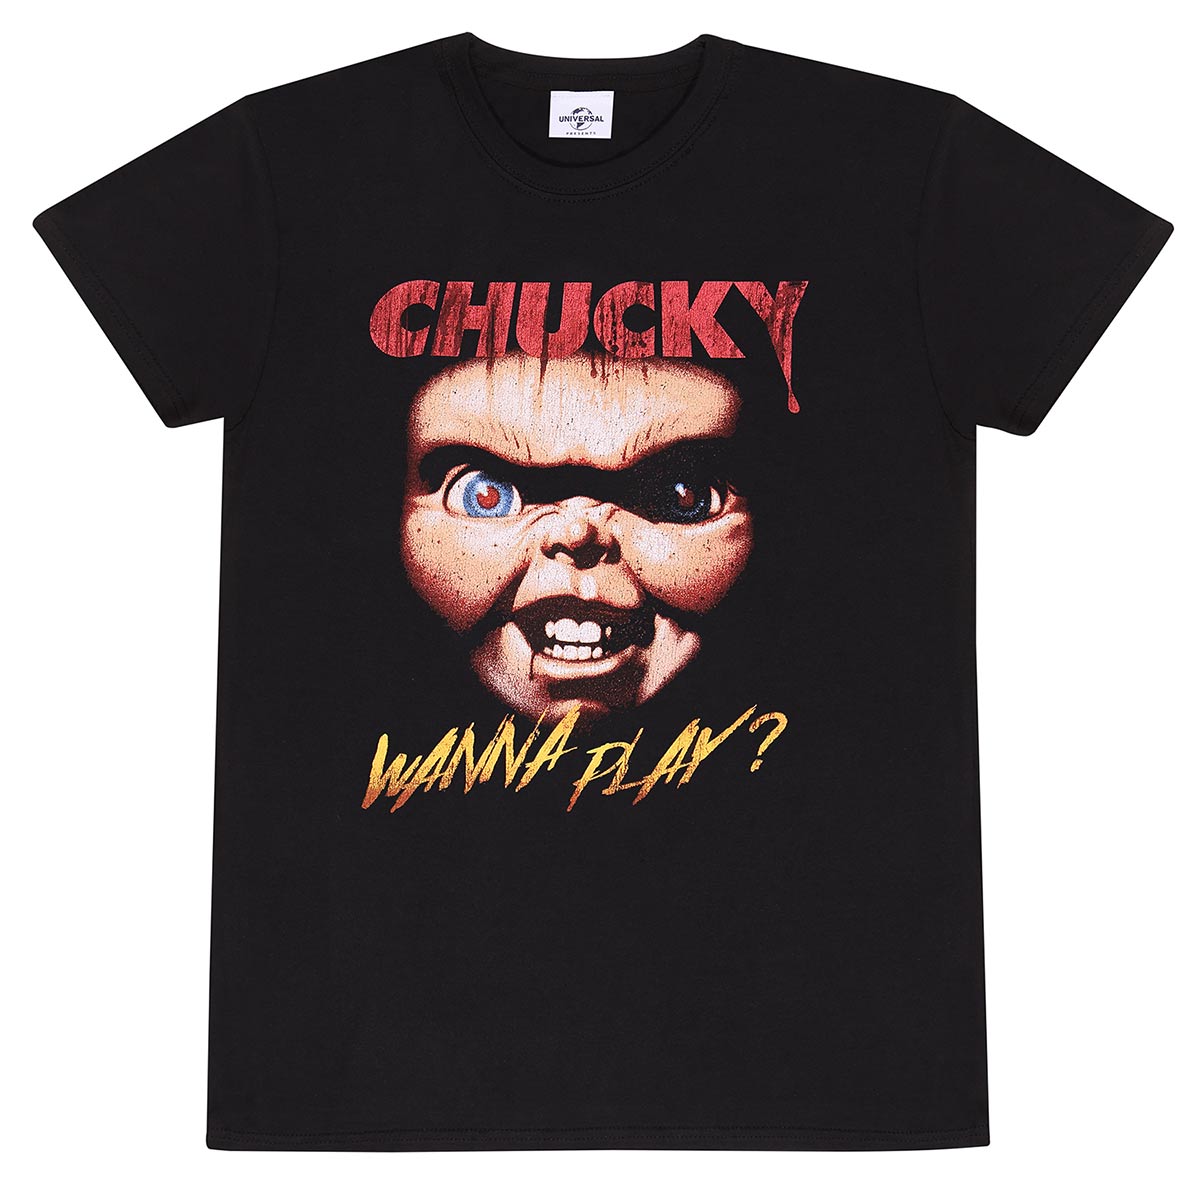 3 Child's Play Chucky Face T-Shirt